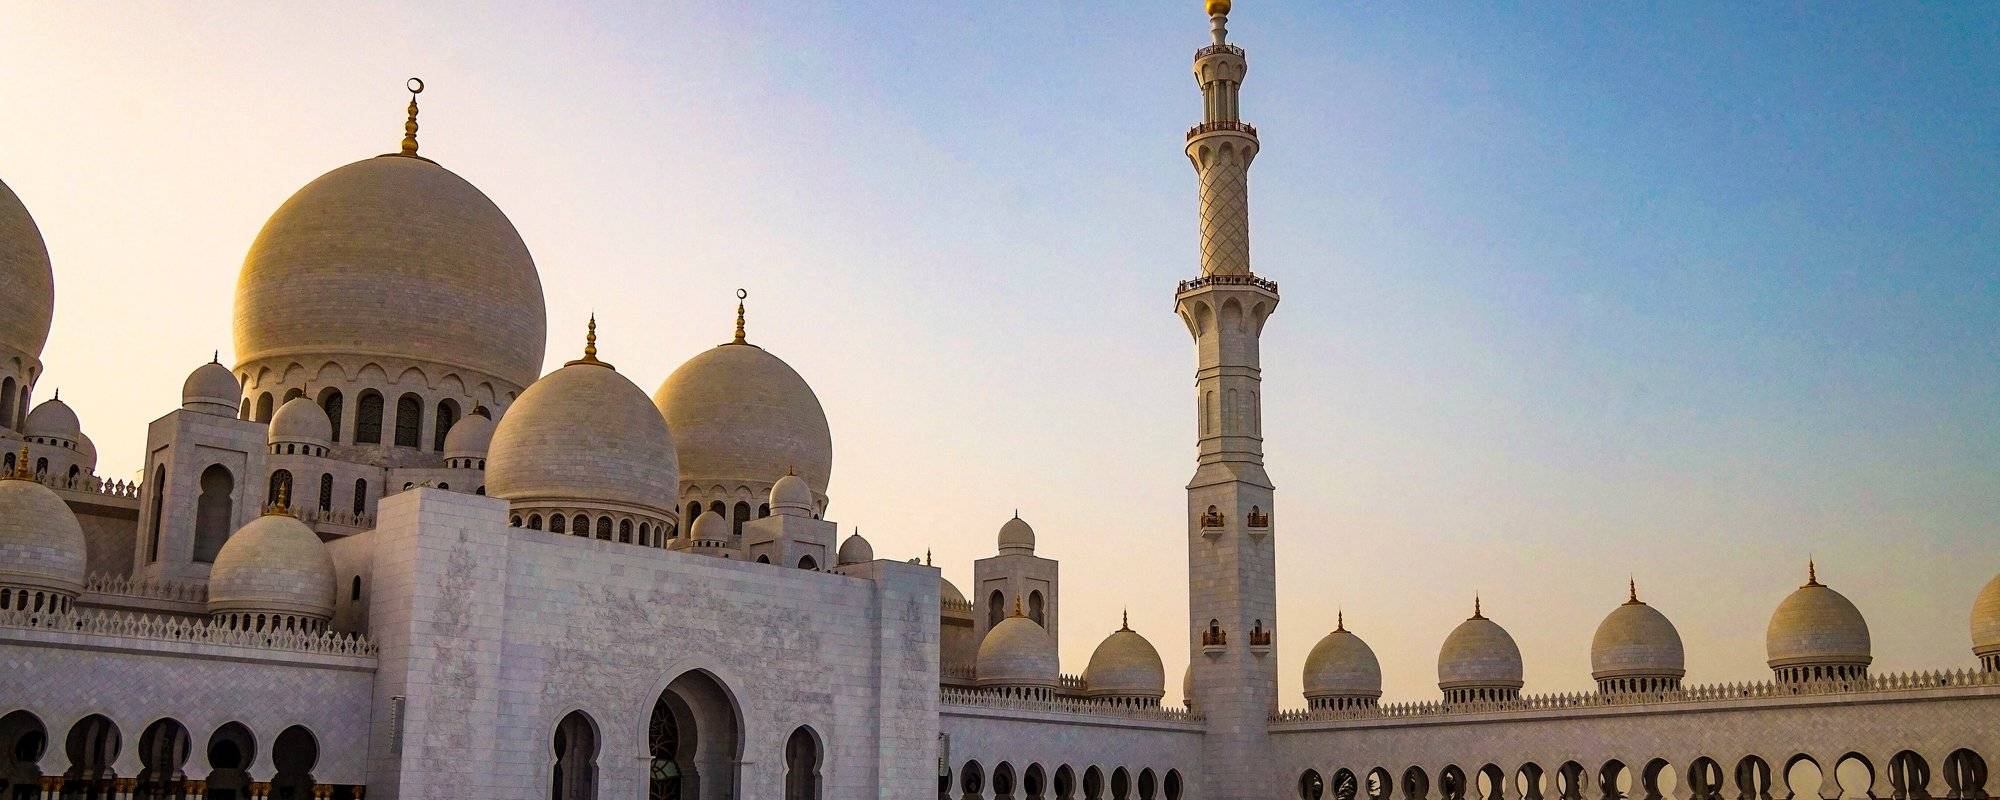 Travel Blog 38: Travel With Me To World's Famous Landmark at Abu Dhabi